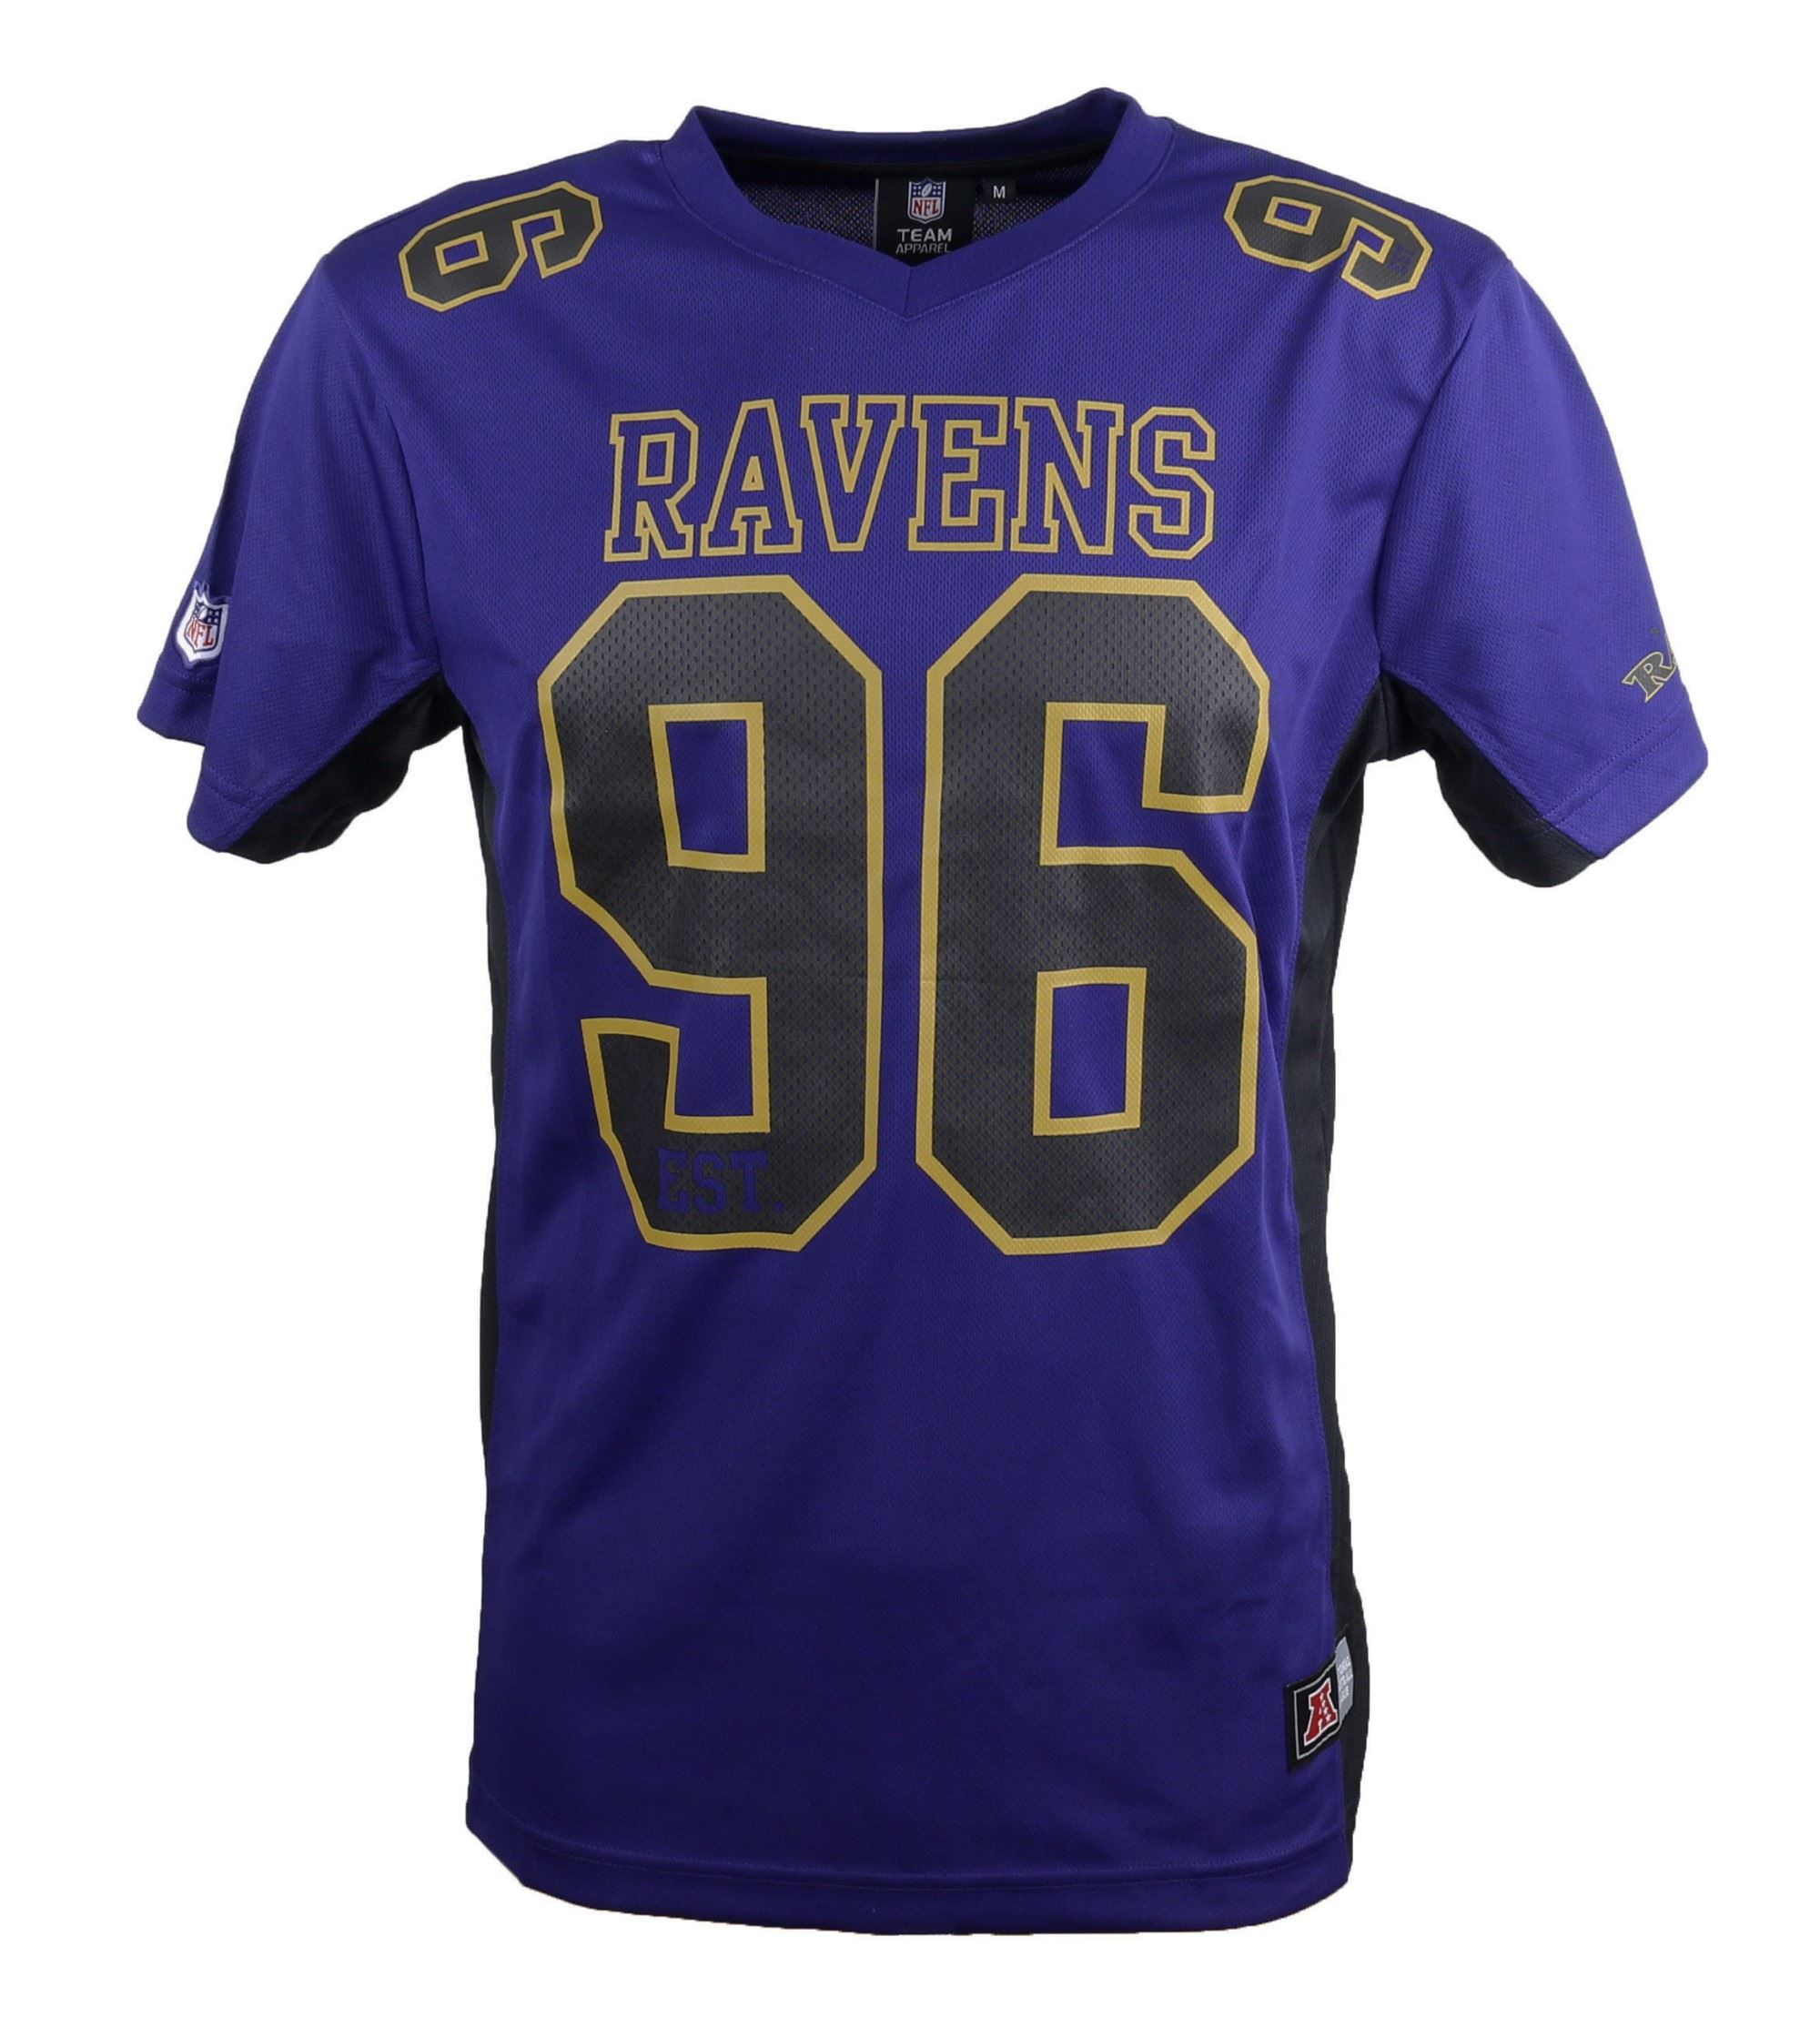 Baltimore Ravens NFL Players Poly Mesh Purple T-Shirt Fanatics